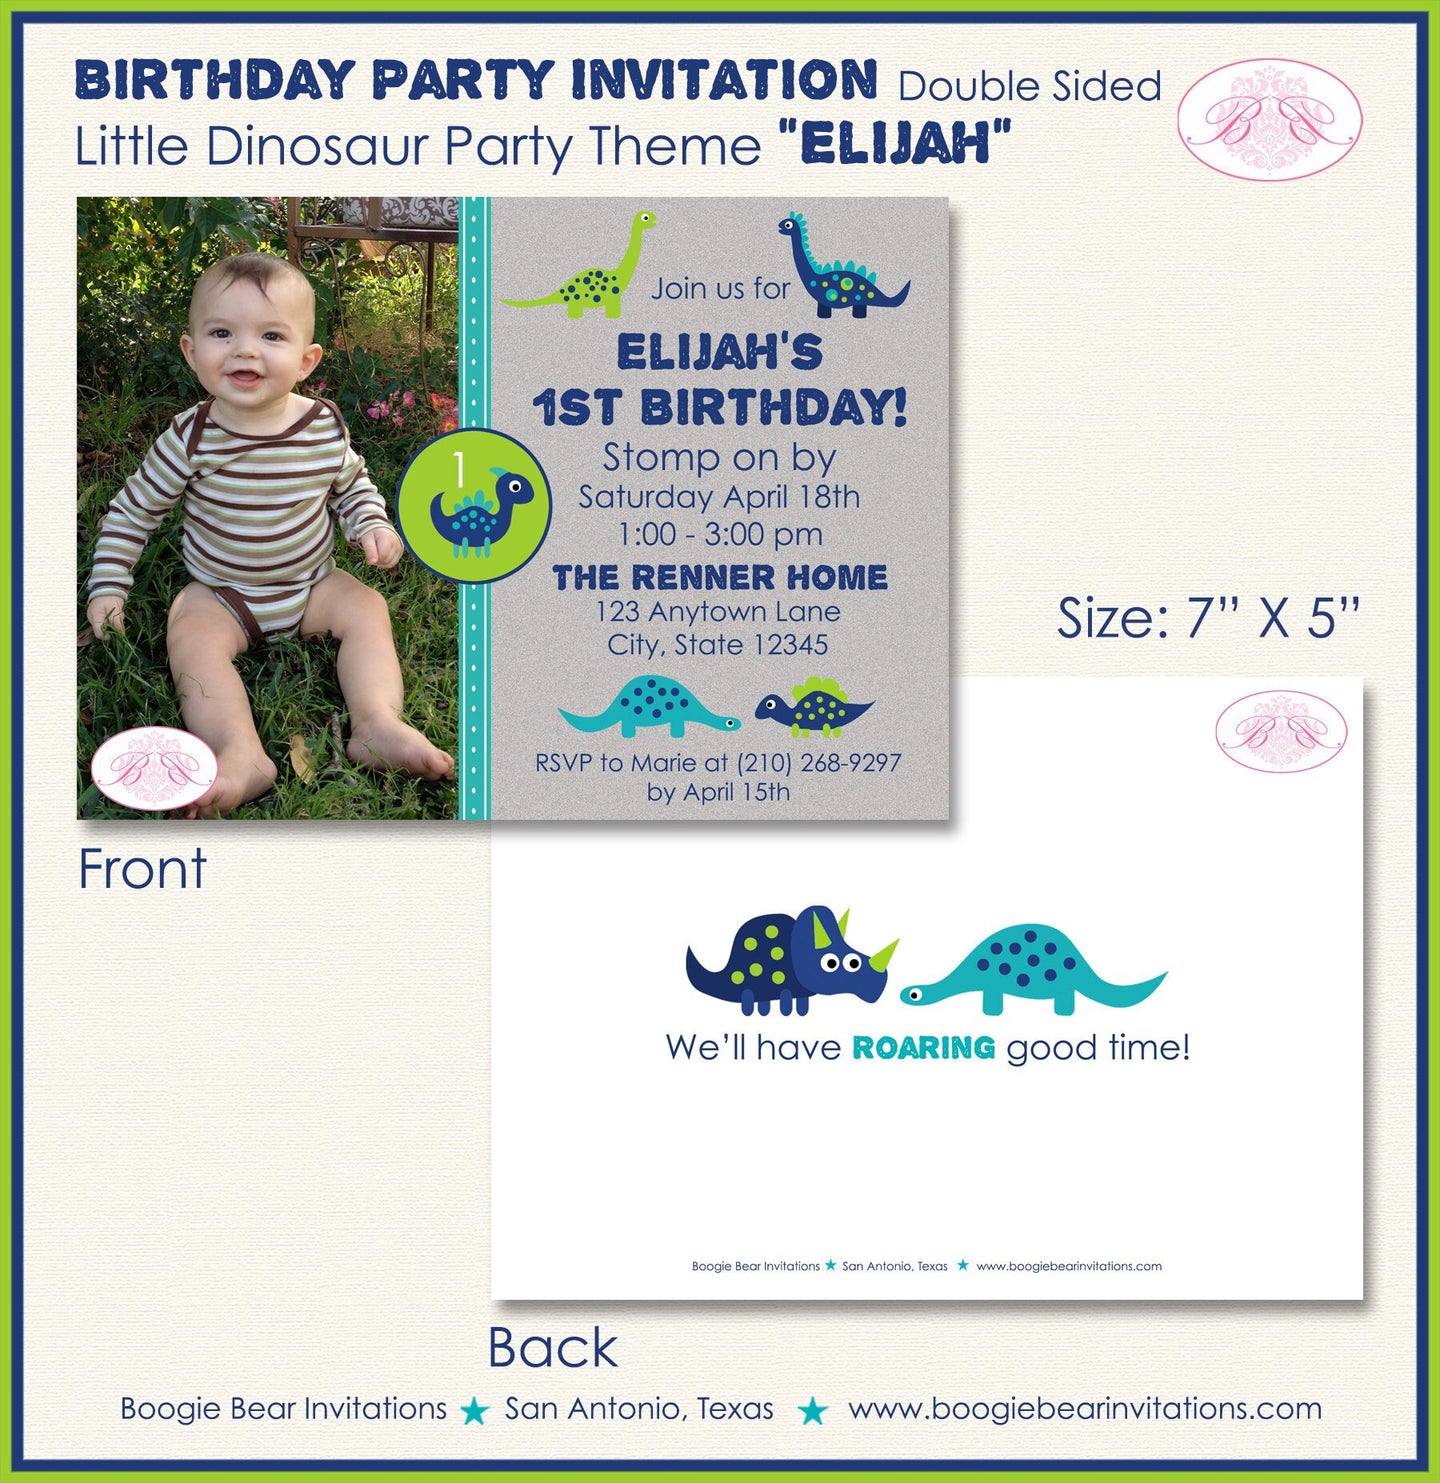 Dinosaur Birthday Party Invitation Photo Boy Girl Navy Lime Aqua 1st 2nd Boogie Bear Invitations Elijah Theme Paperless Printable Printed